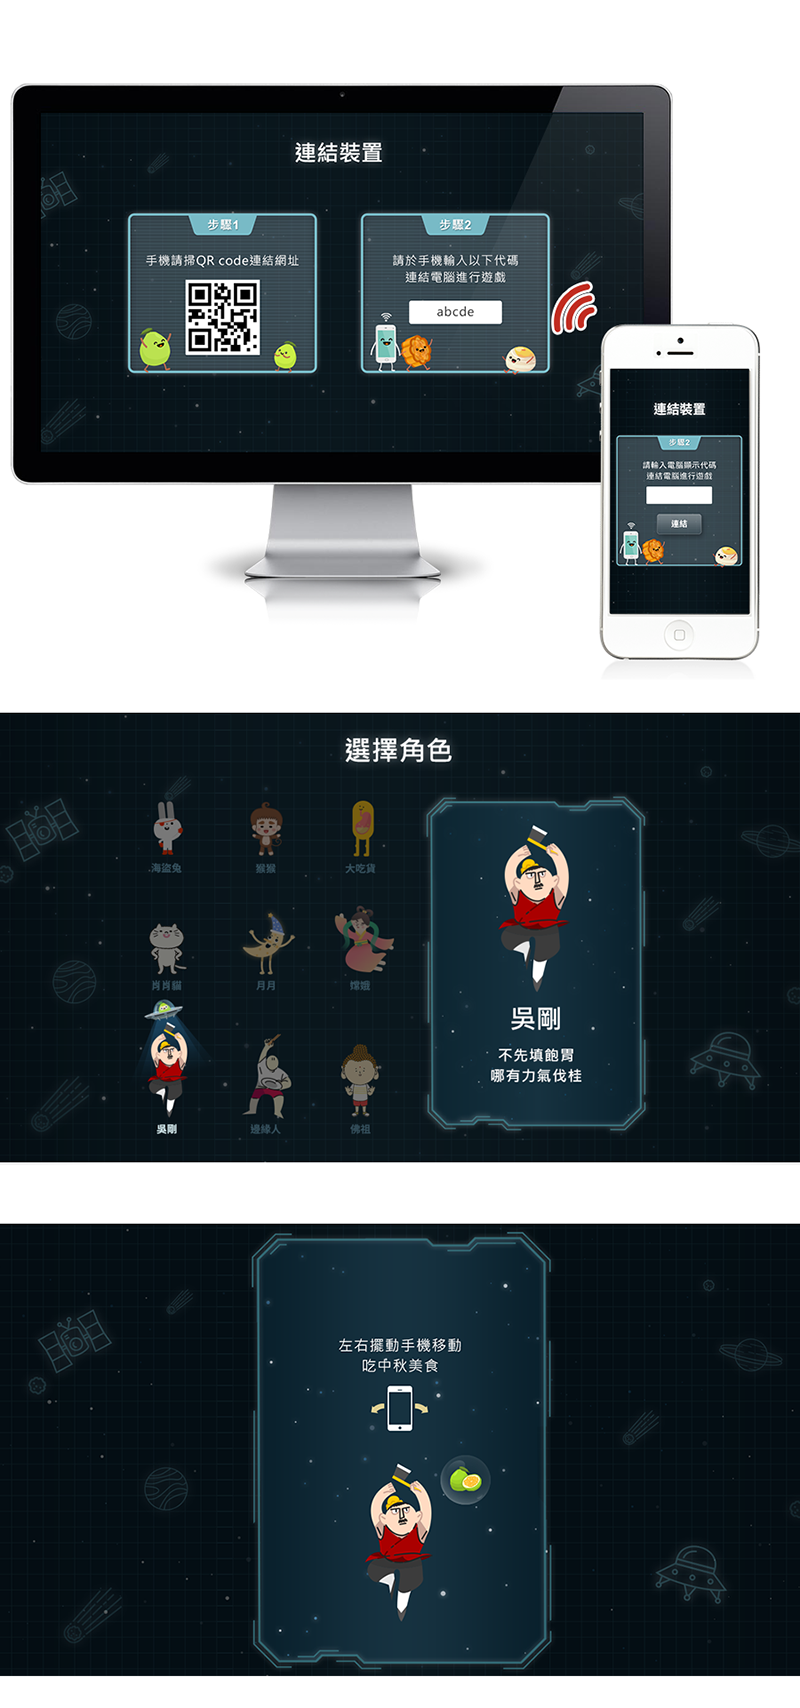 SOBO 中秋節慶互動遊戲 活動網站